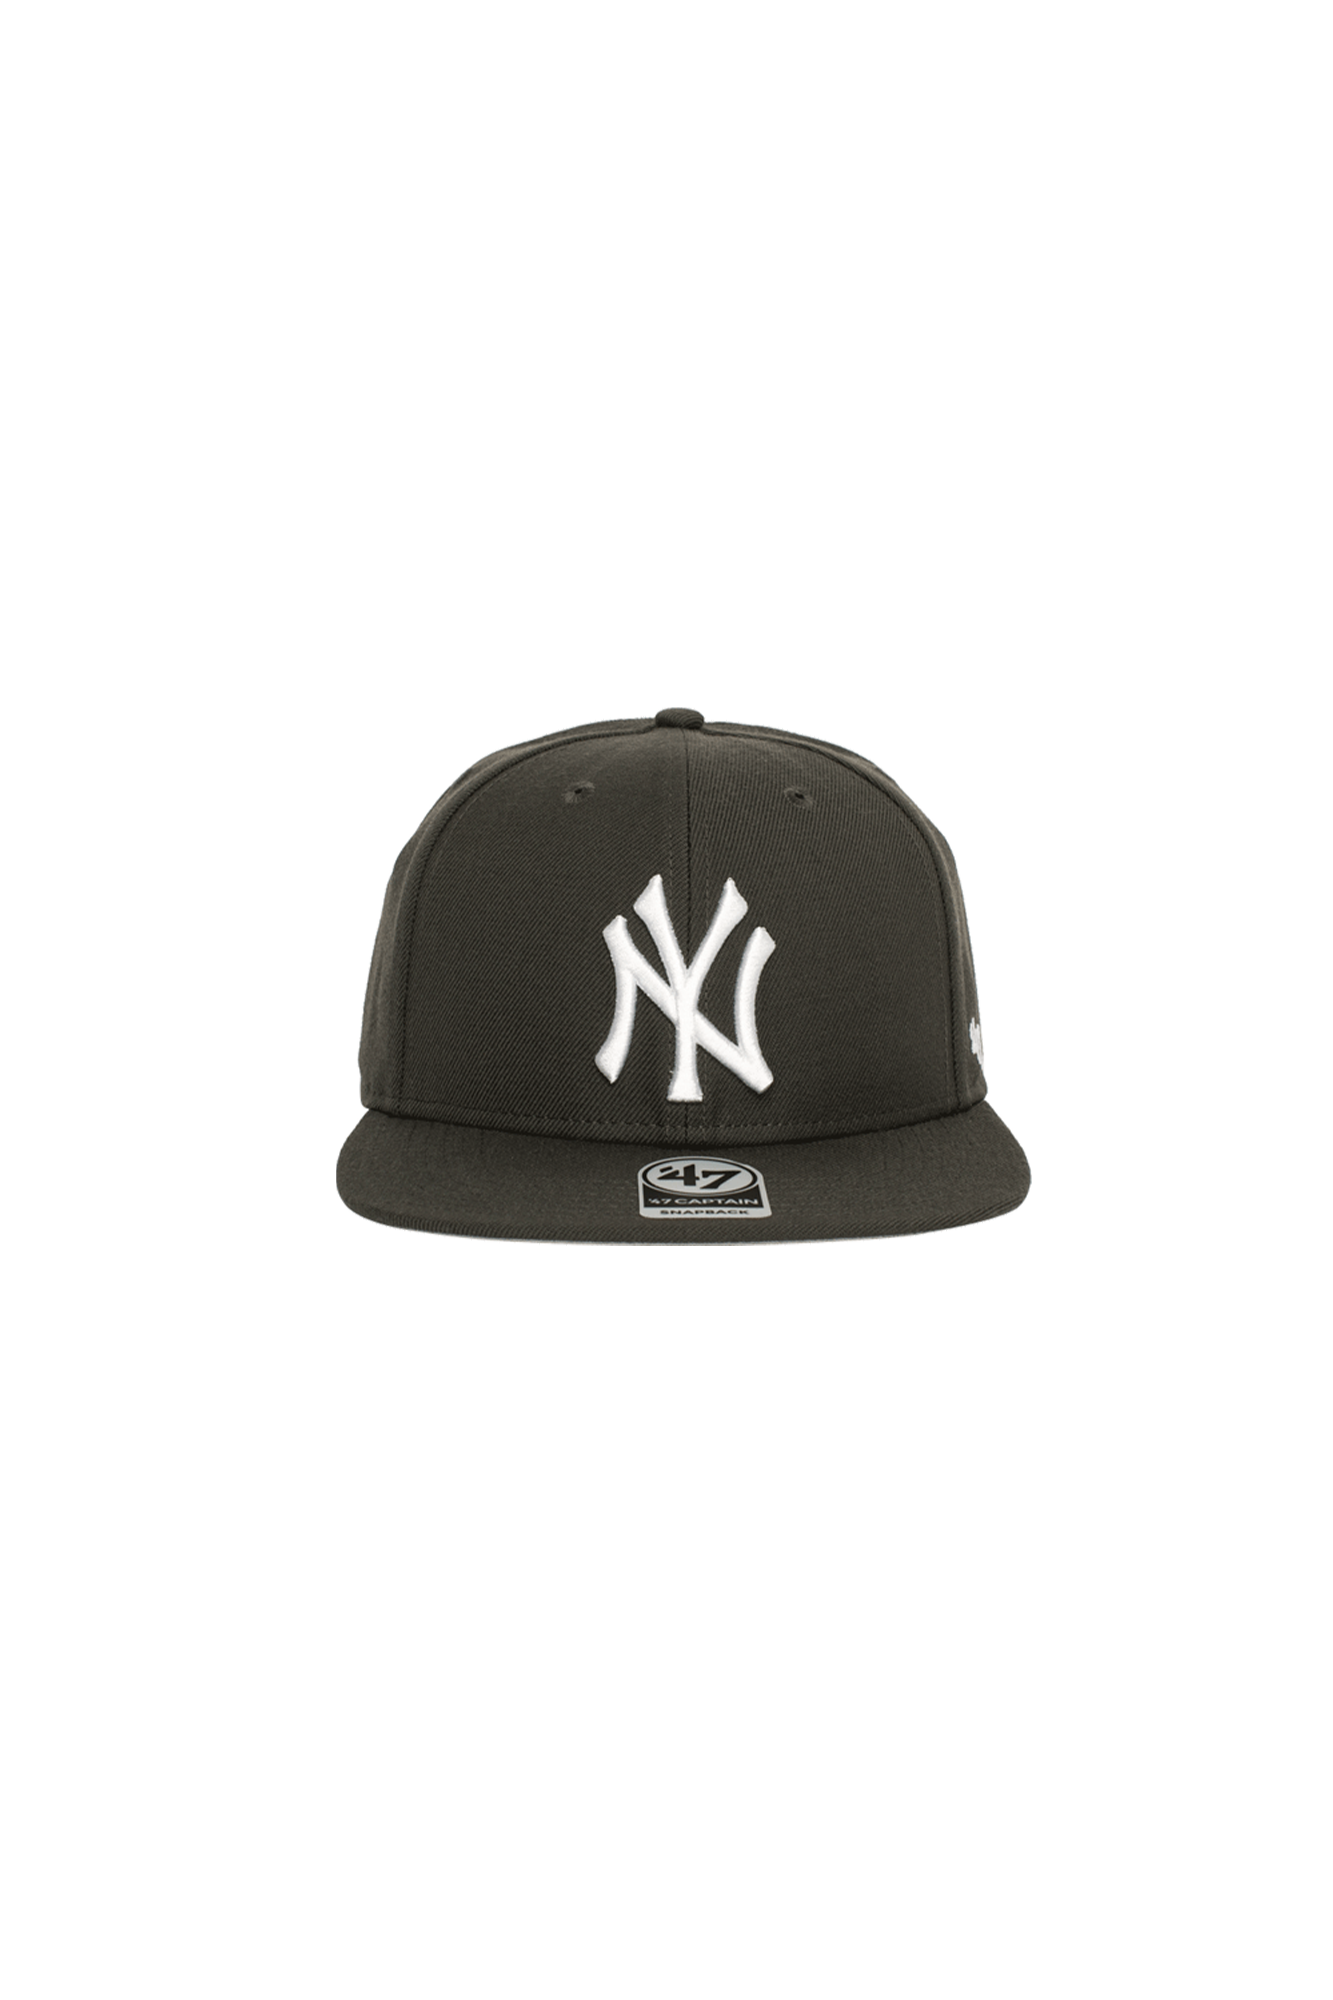 Captain New York Yankees